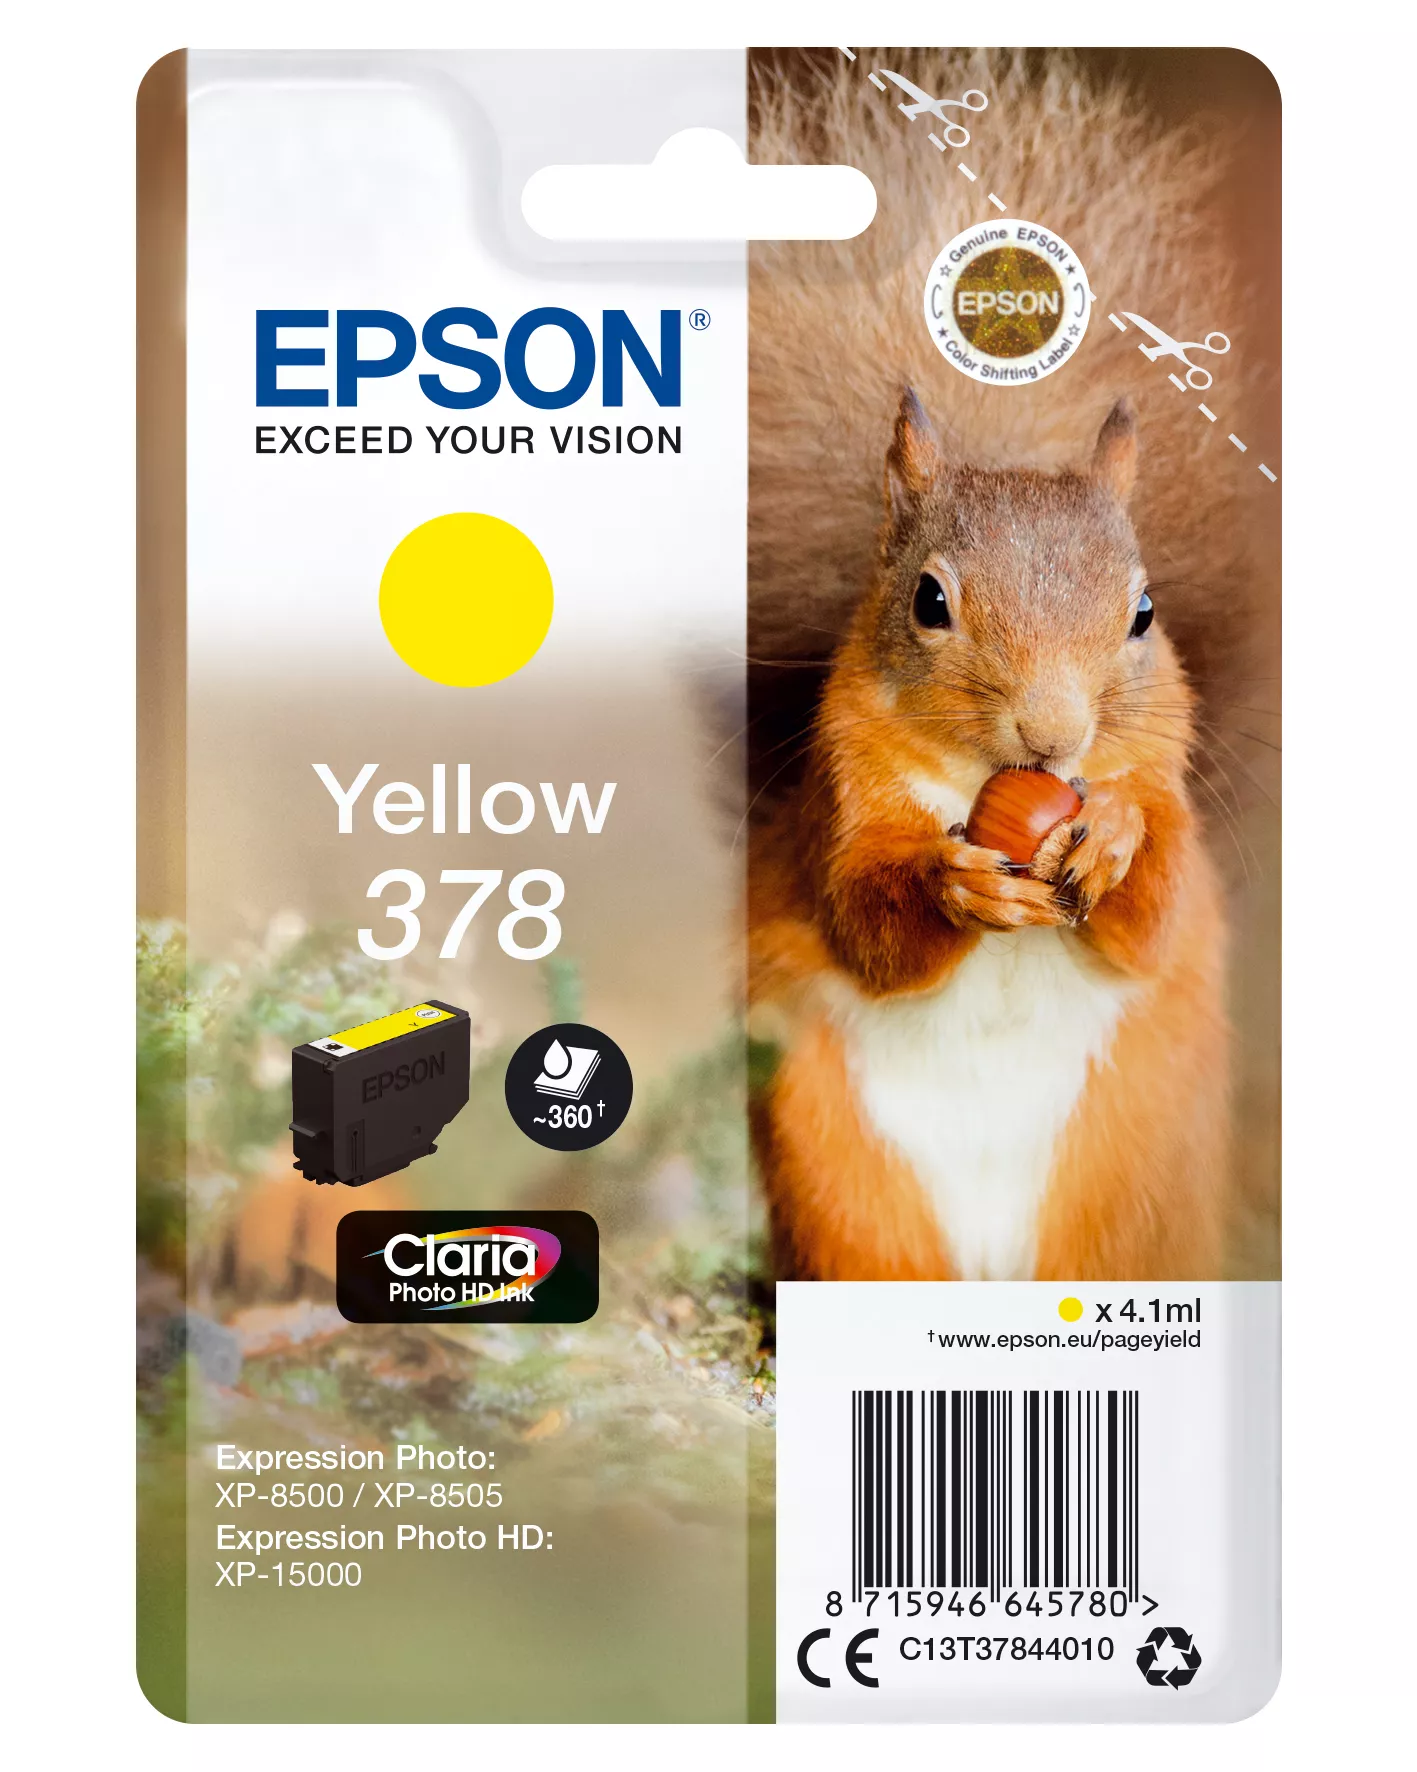 Vente EPSON Singlepack Yellow 378 Eichhörnchen Clara Photo HD au meilleur prix